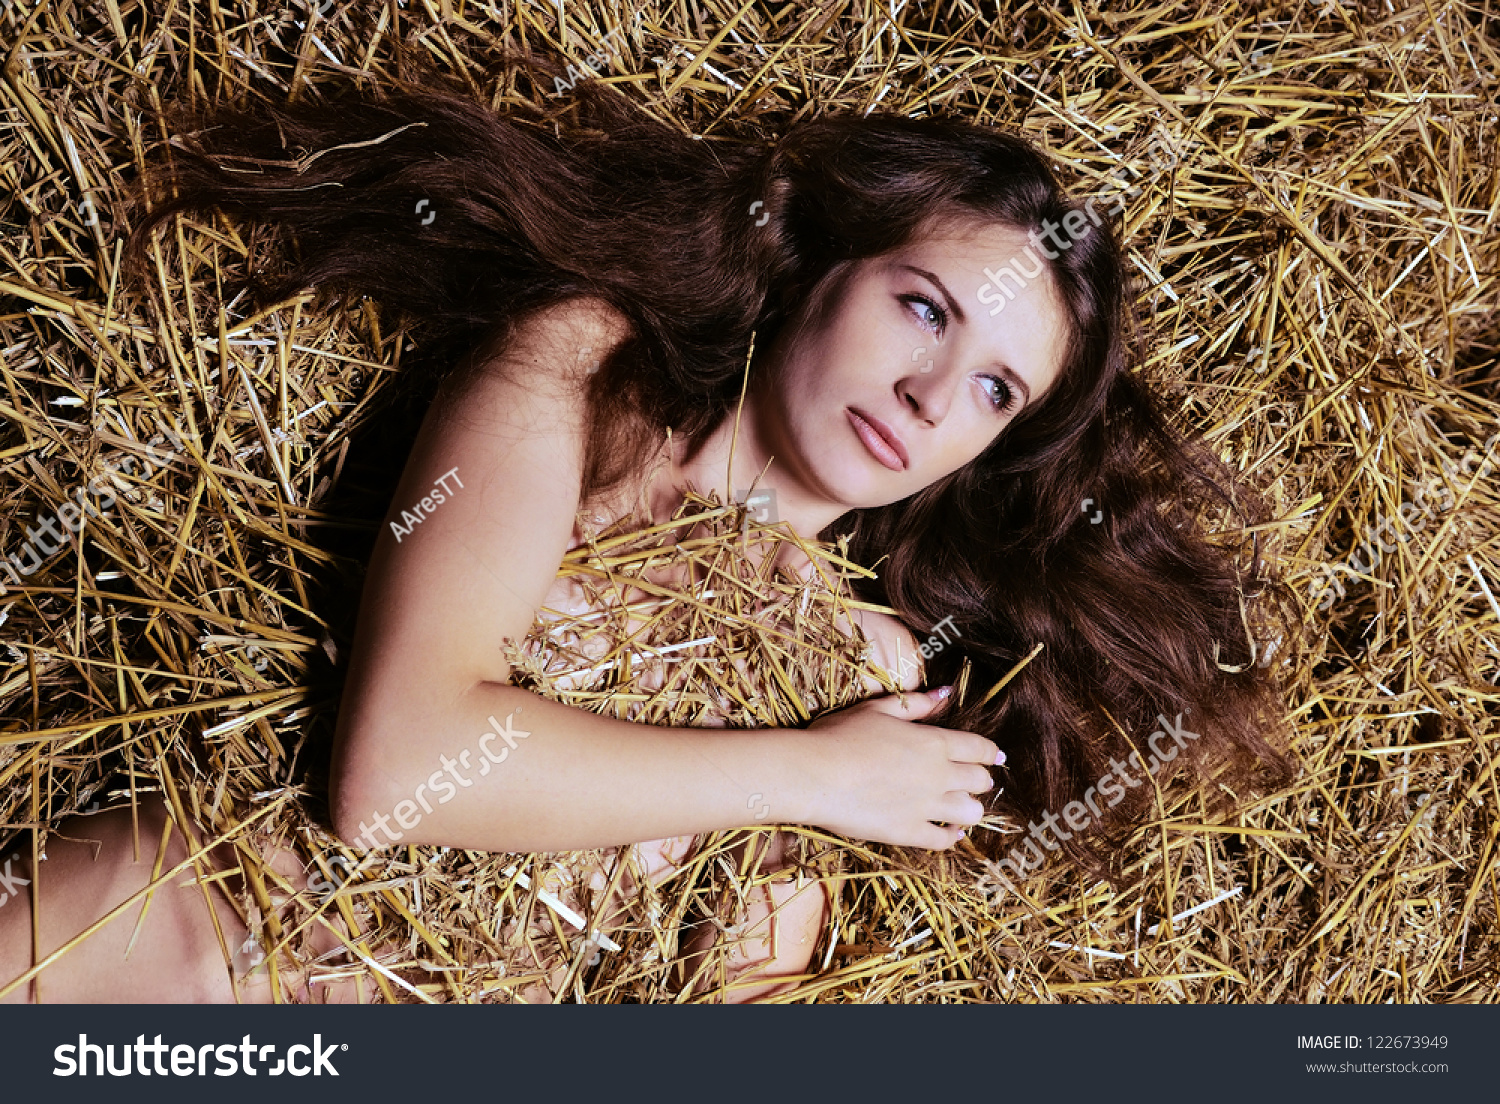 Naked Girl Covered Hay Stock Photo Shutterstock